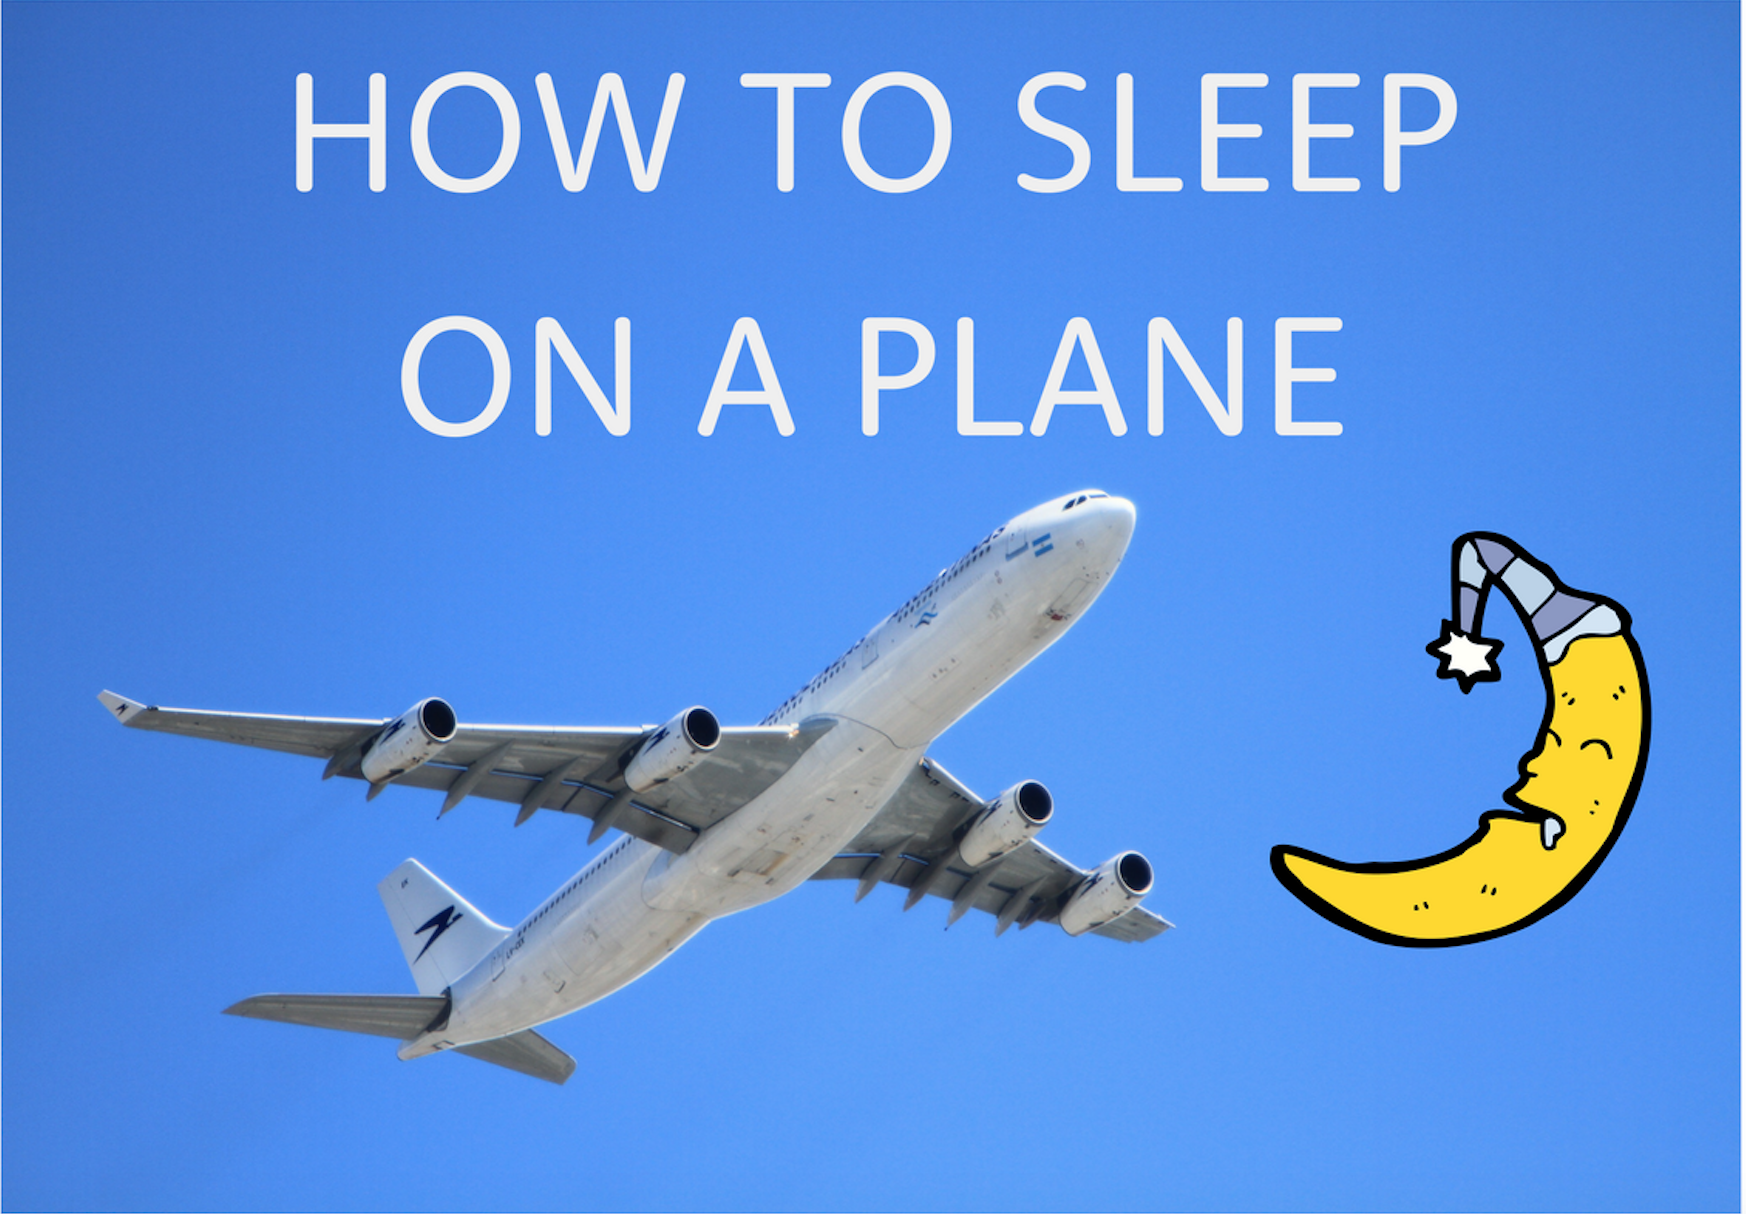 How to sleep on a plane title.jpg